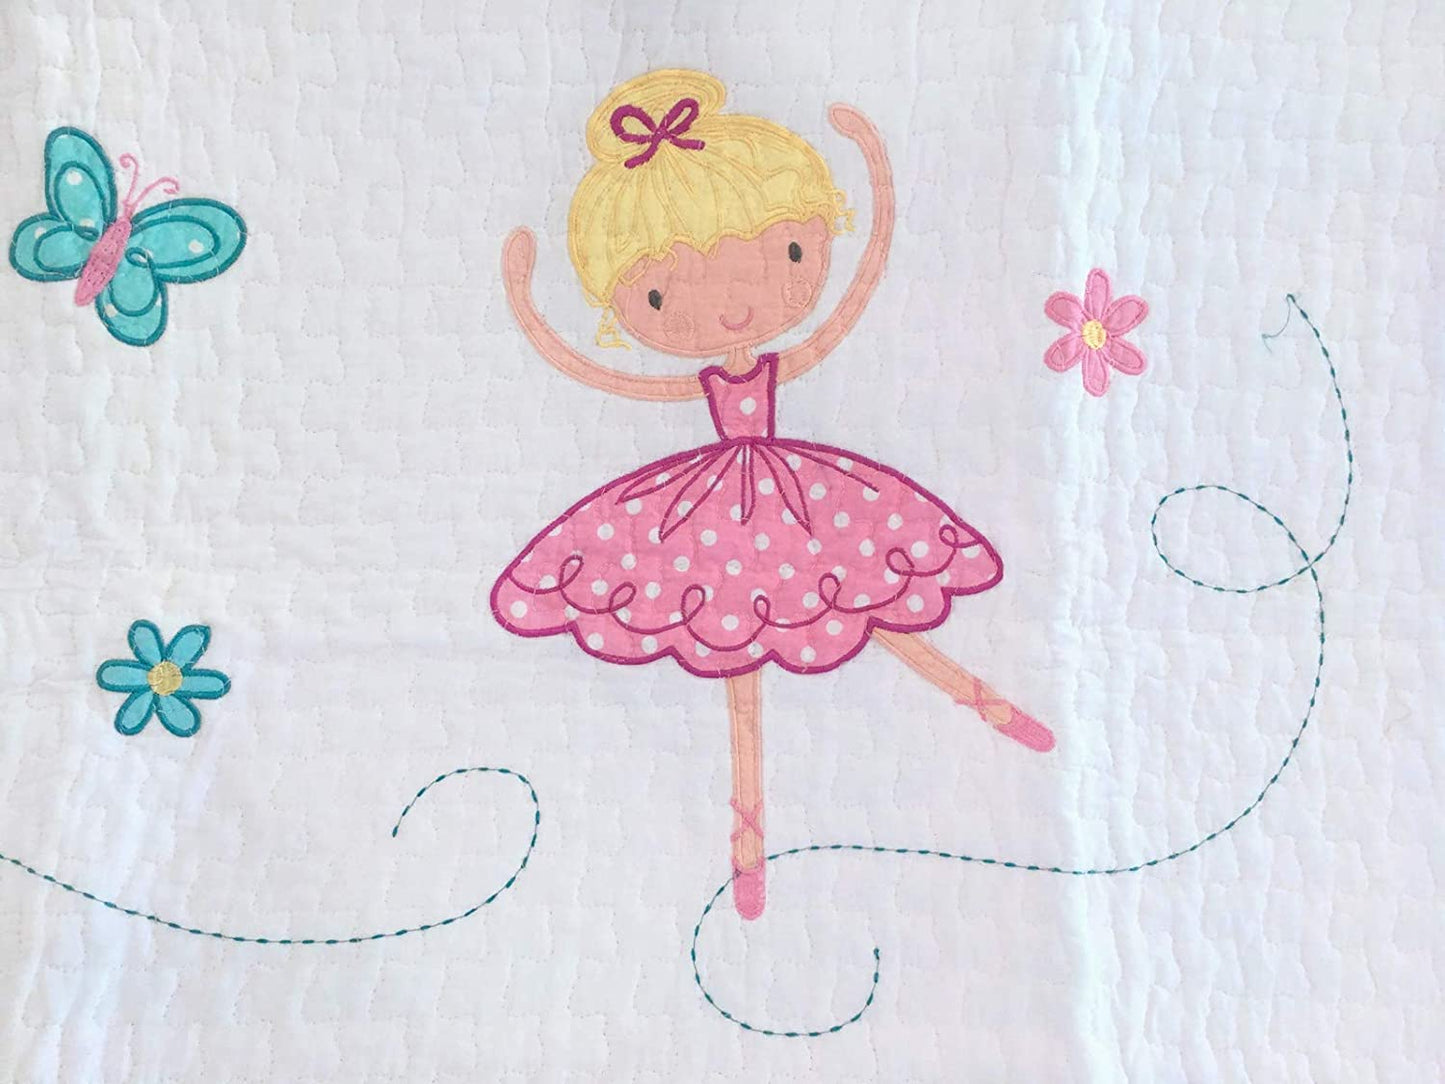 Ballerina Girl Pink Floral Dot Print Patchwork Cotton Reversible Quilt Bedding Set